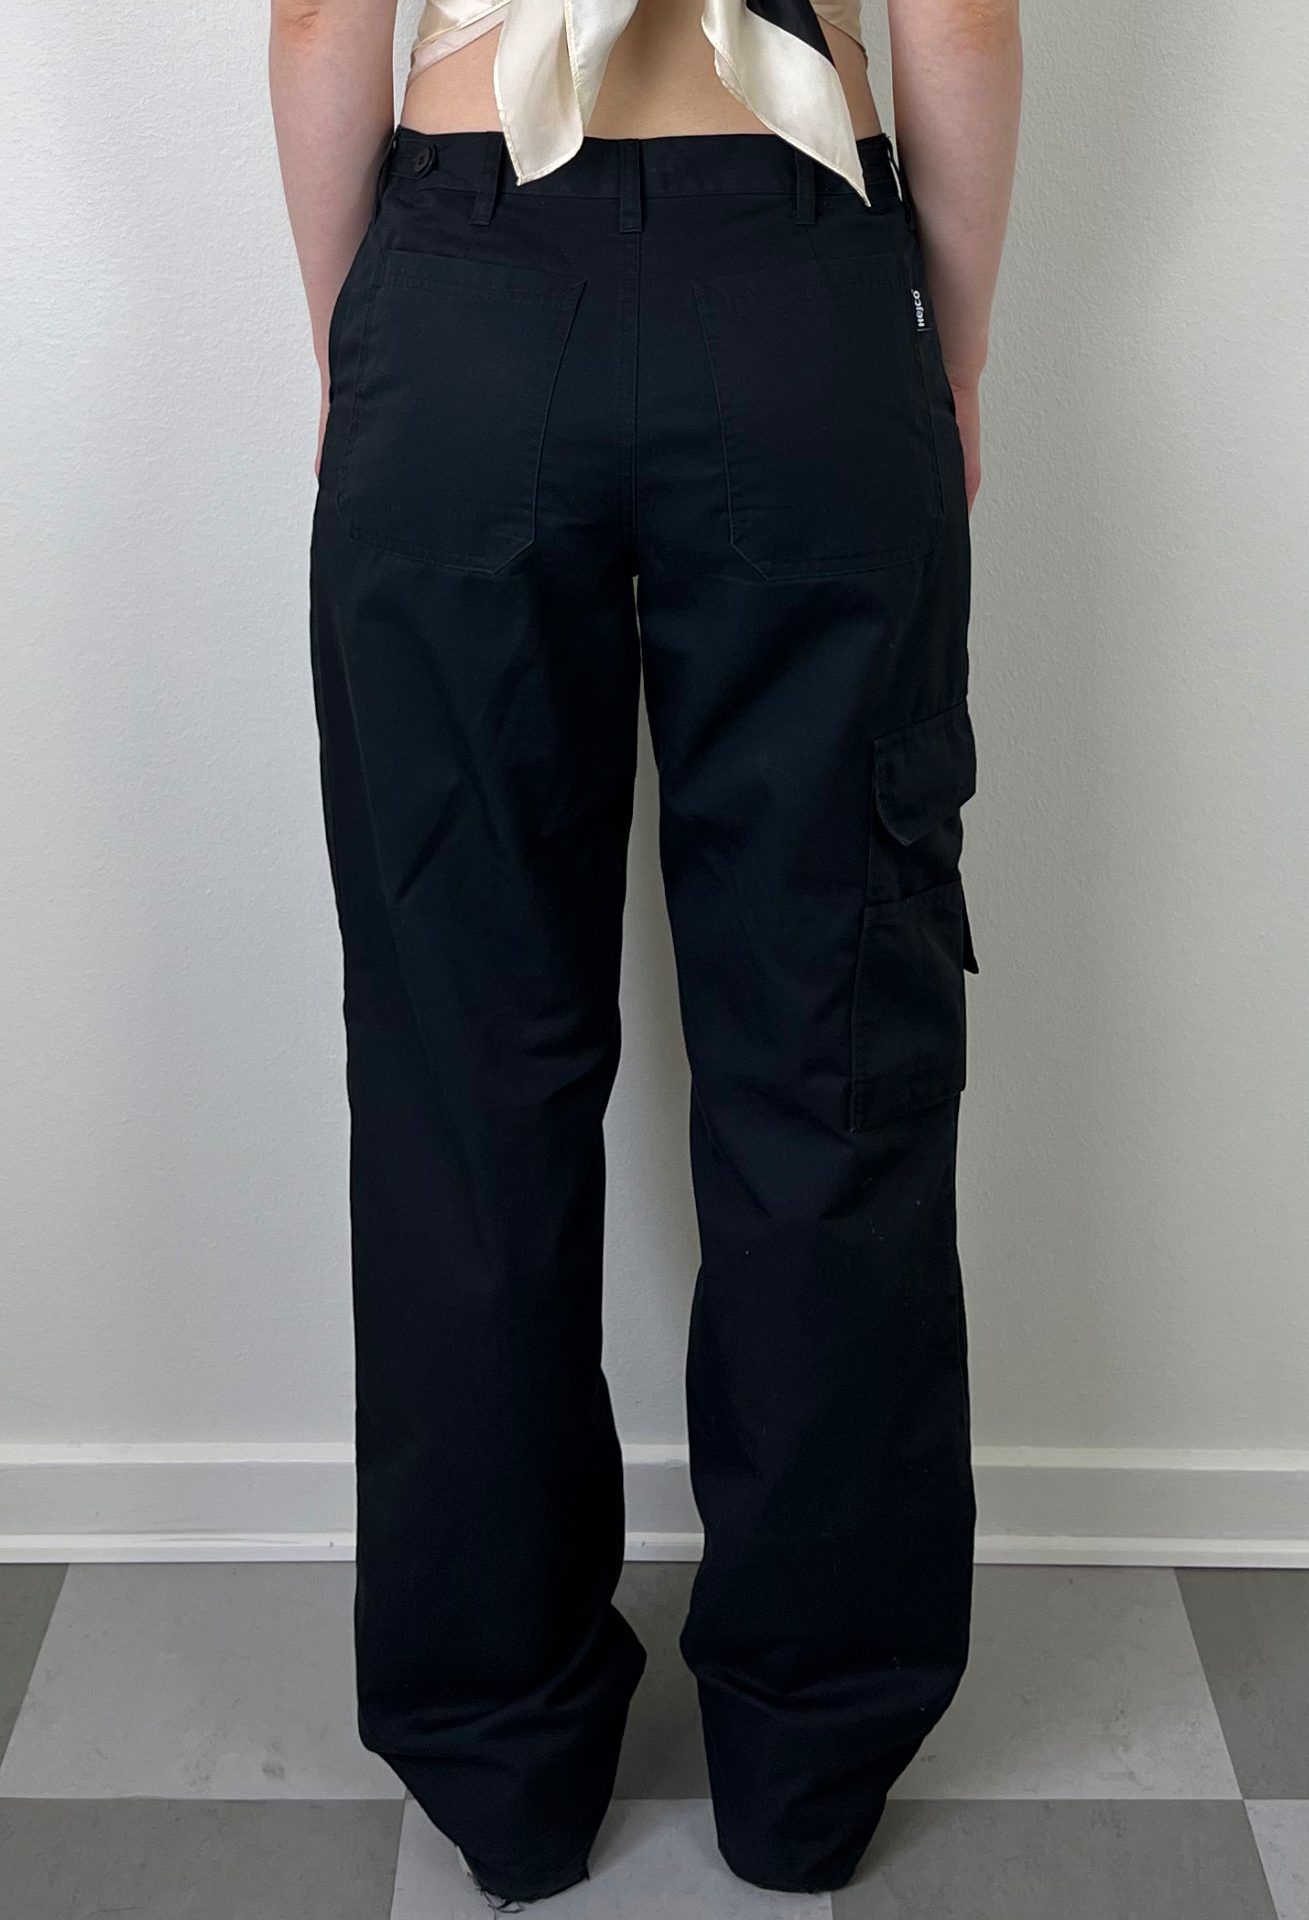 Hejco - Black Cargo pants (38)